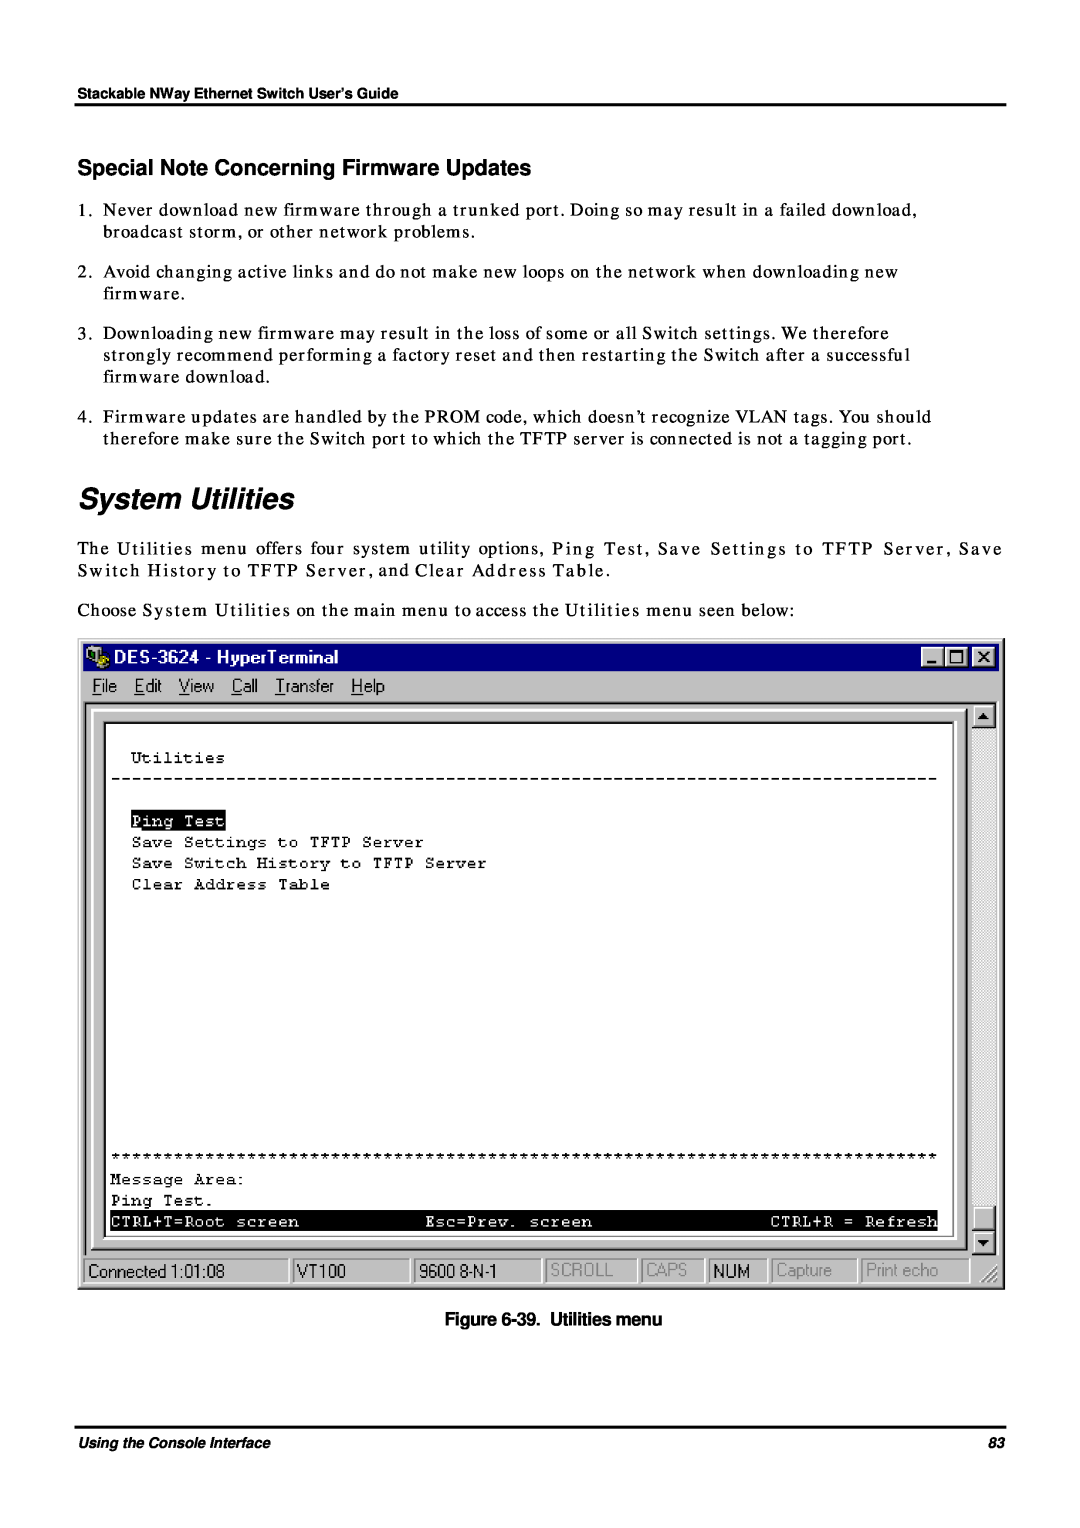 D-Link DES-3624 manual System Utilities, Special Note Concerning Firmware Updates, 39. Utilities menu 